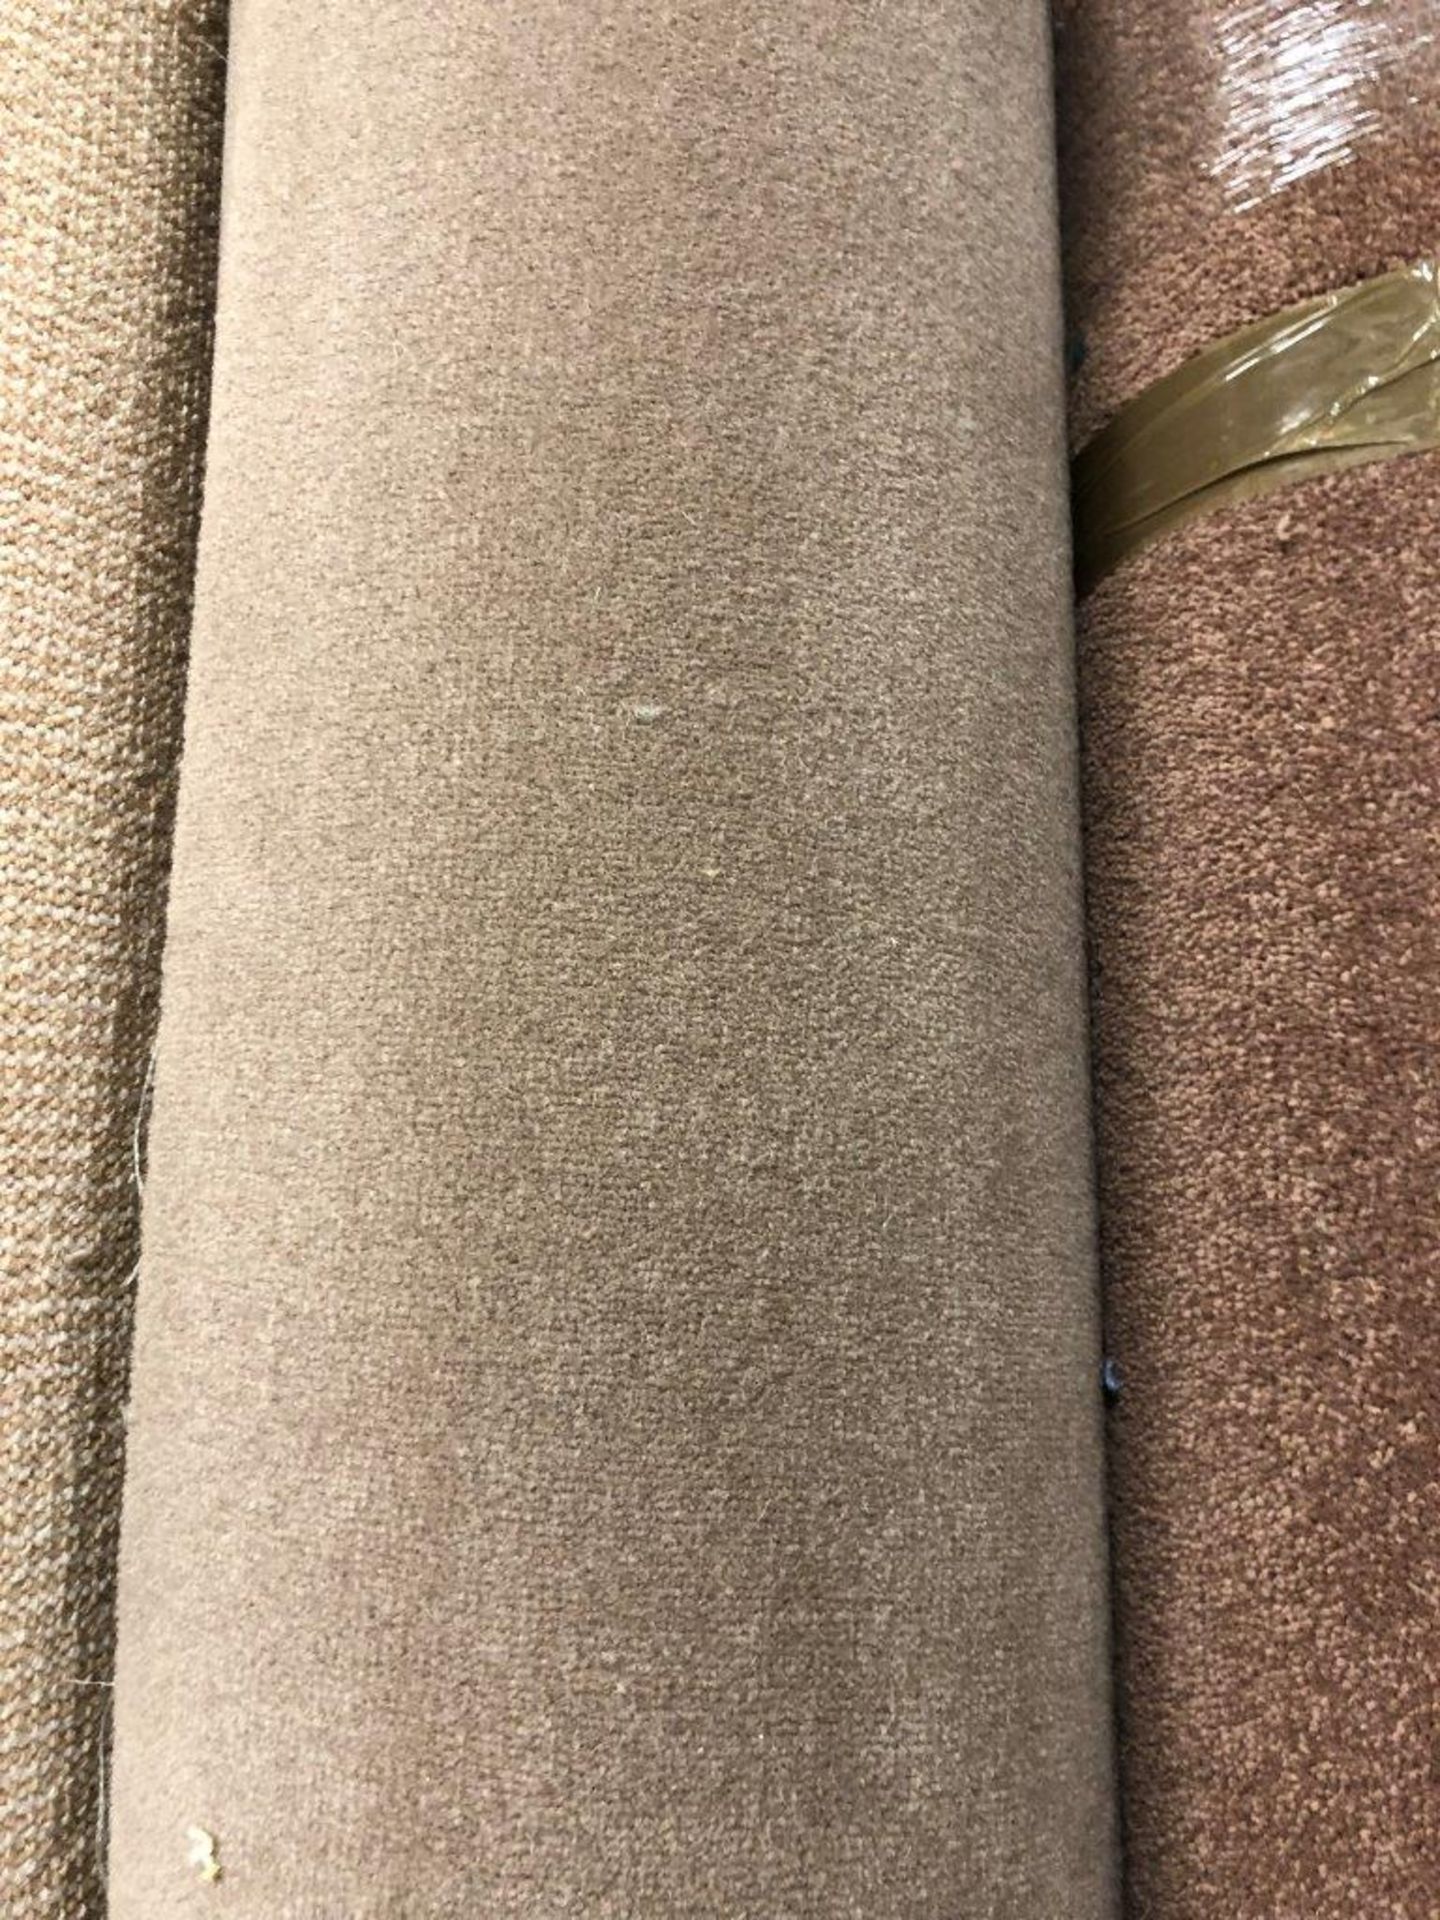 1 x Ryalux Carpet End Roll - Brown 4x2.45m2 - Image 3 of 3